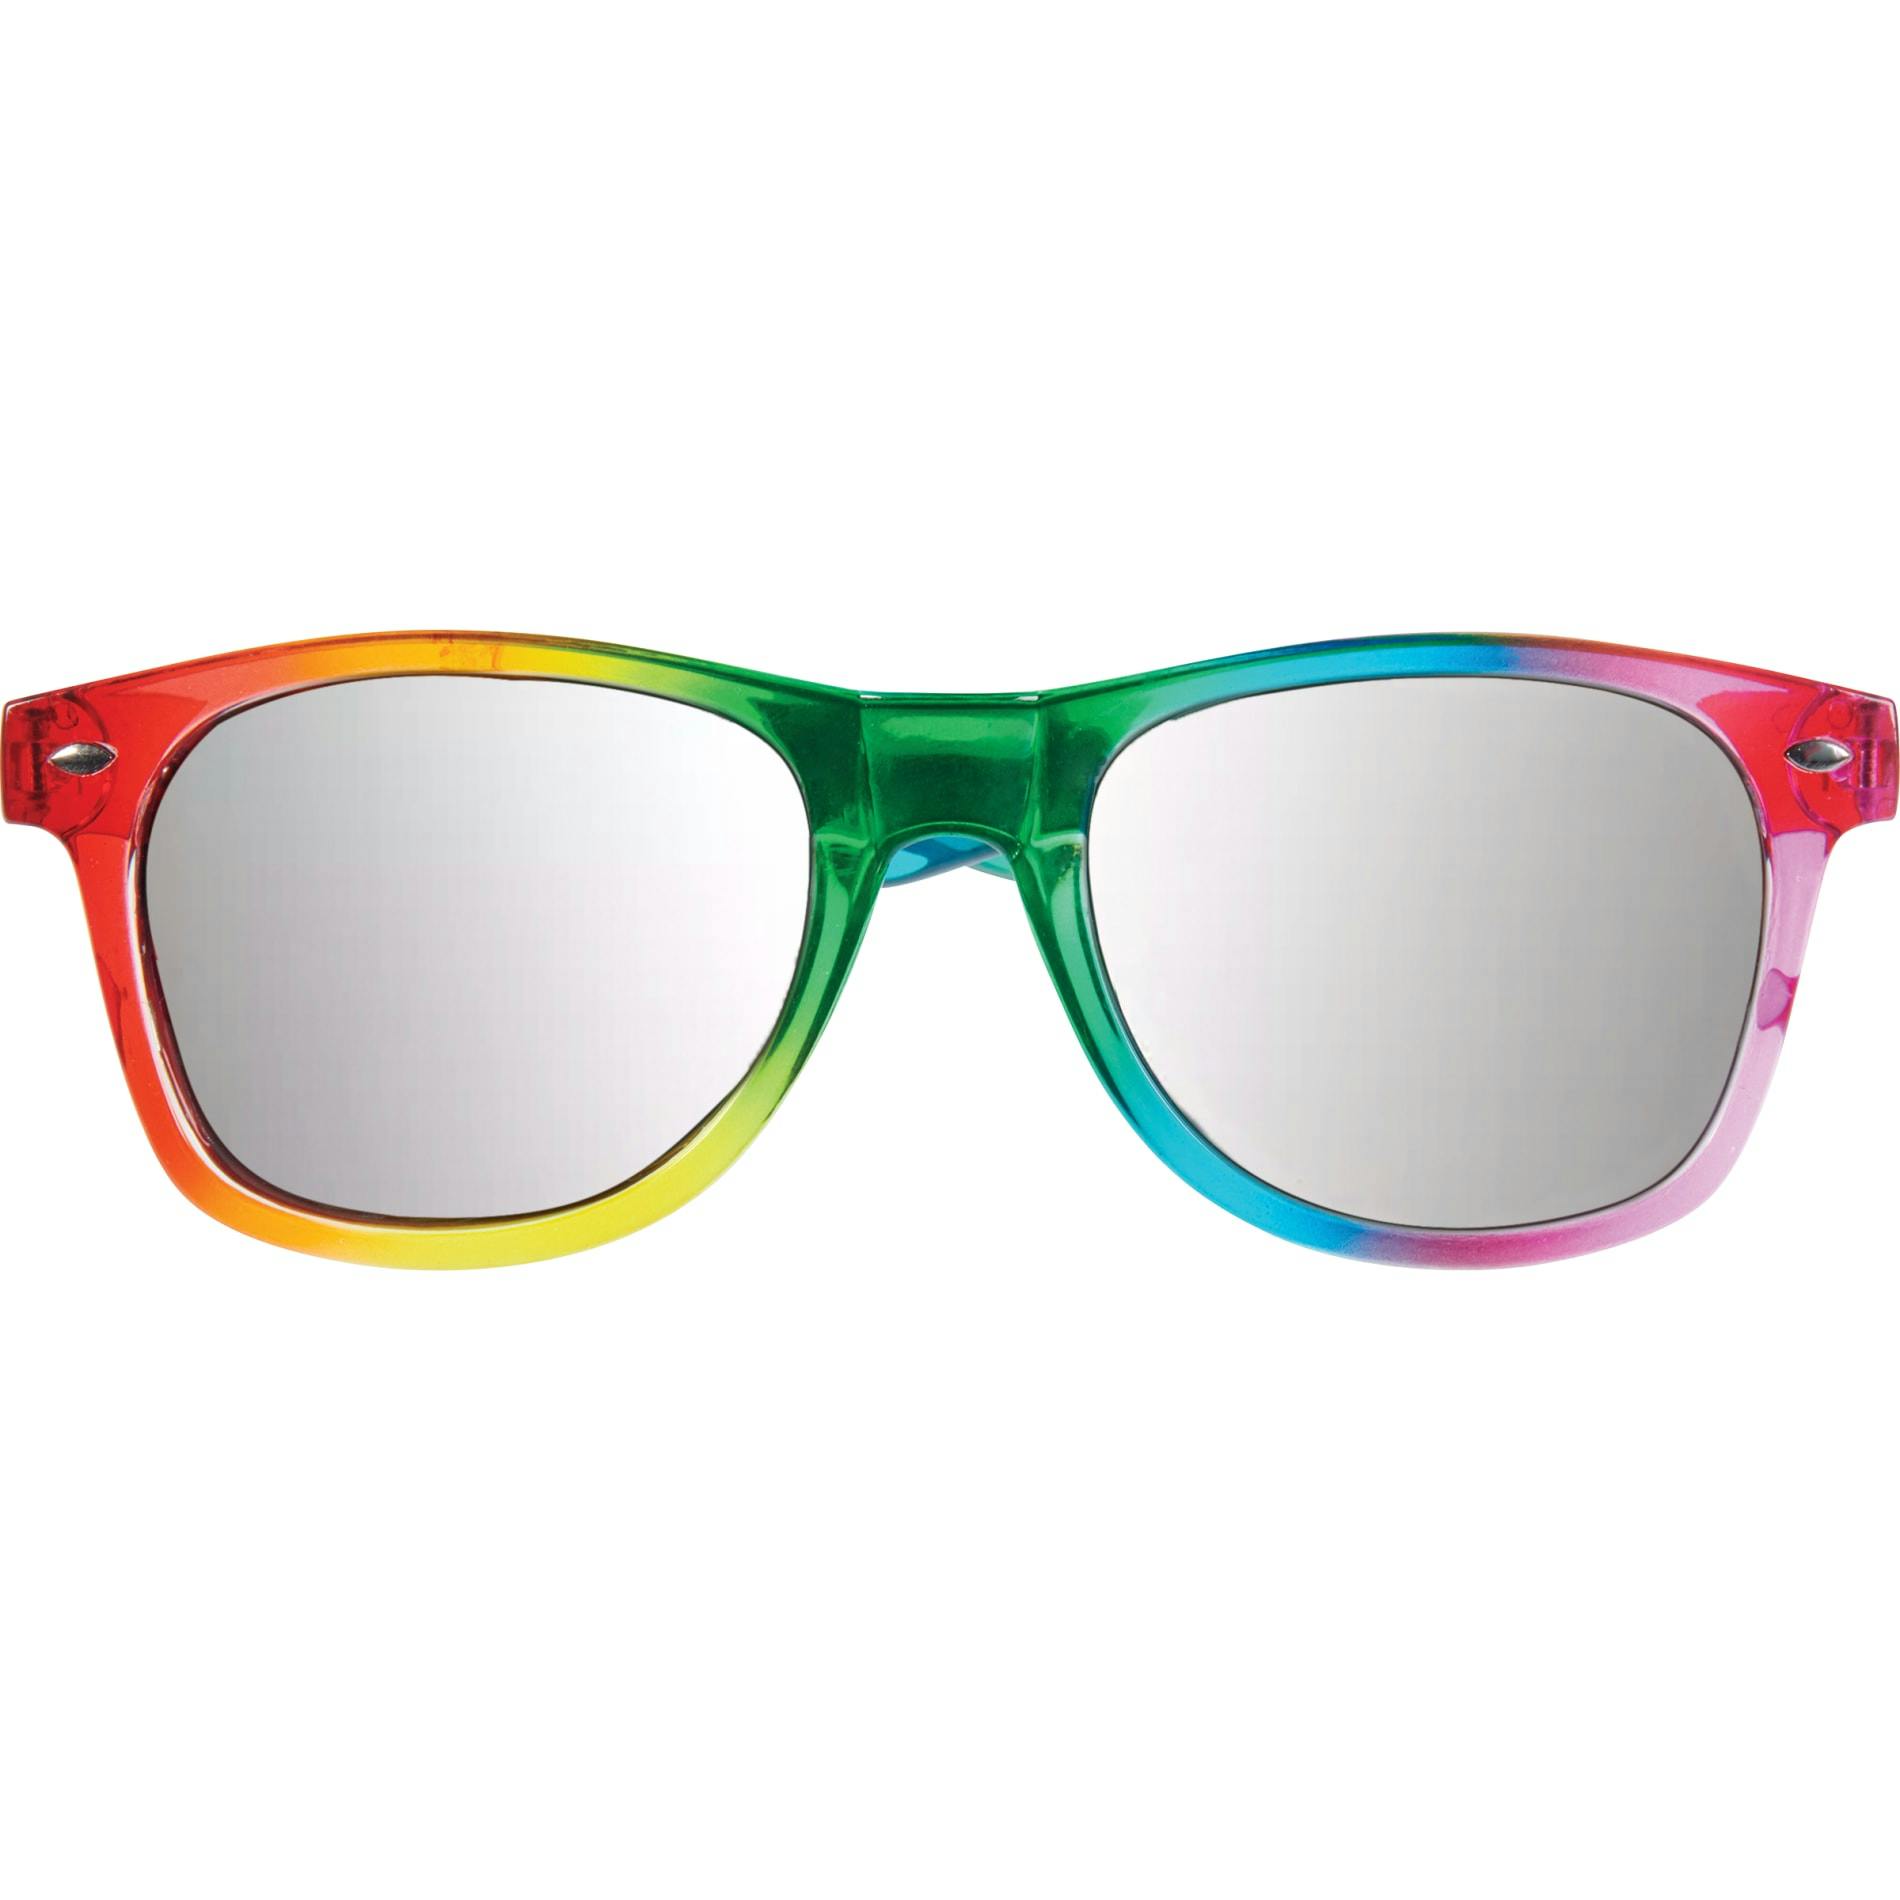 Rainbow Sun Ray Sunglasses - additional Image 2